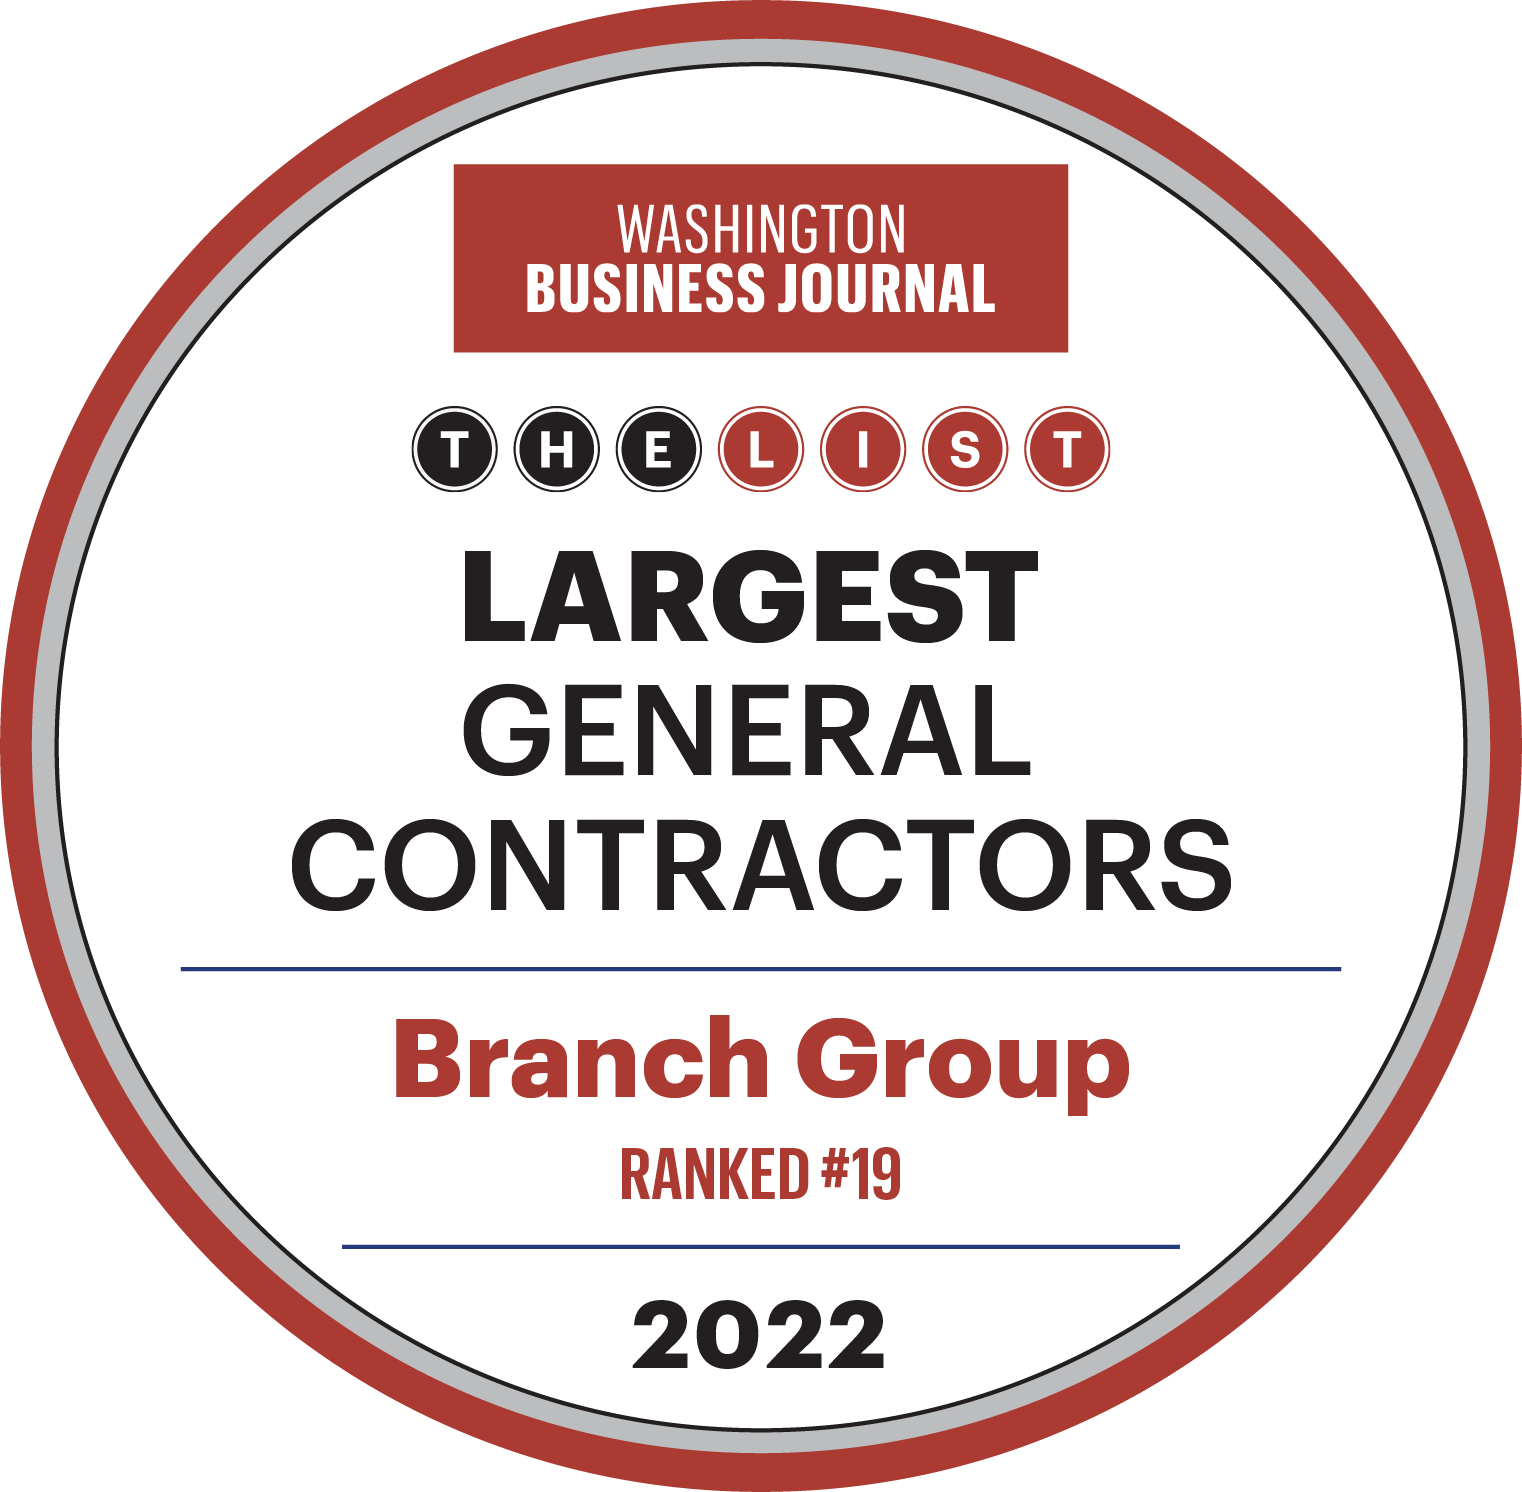 Washington Business Journal Largest General Contractors Rank #19 Branch Group